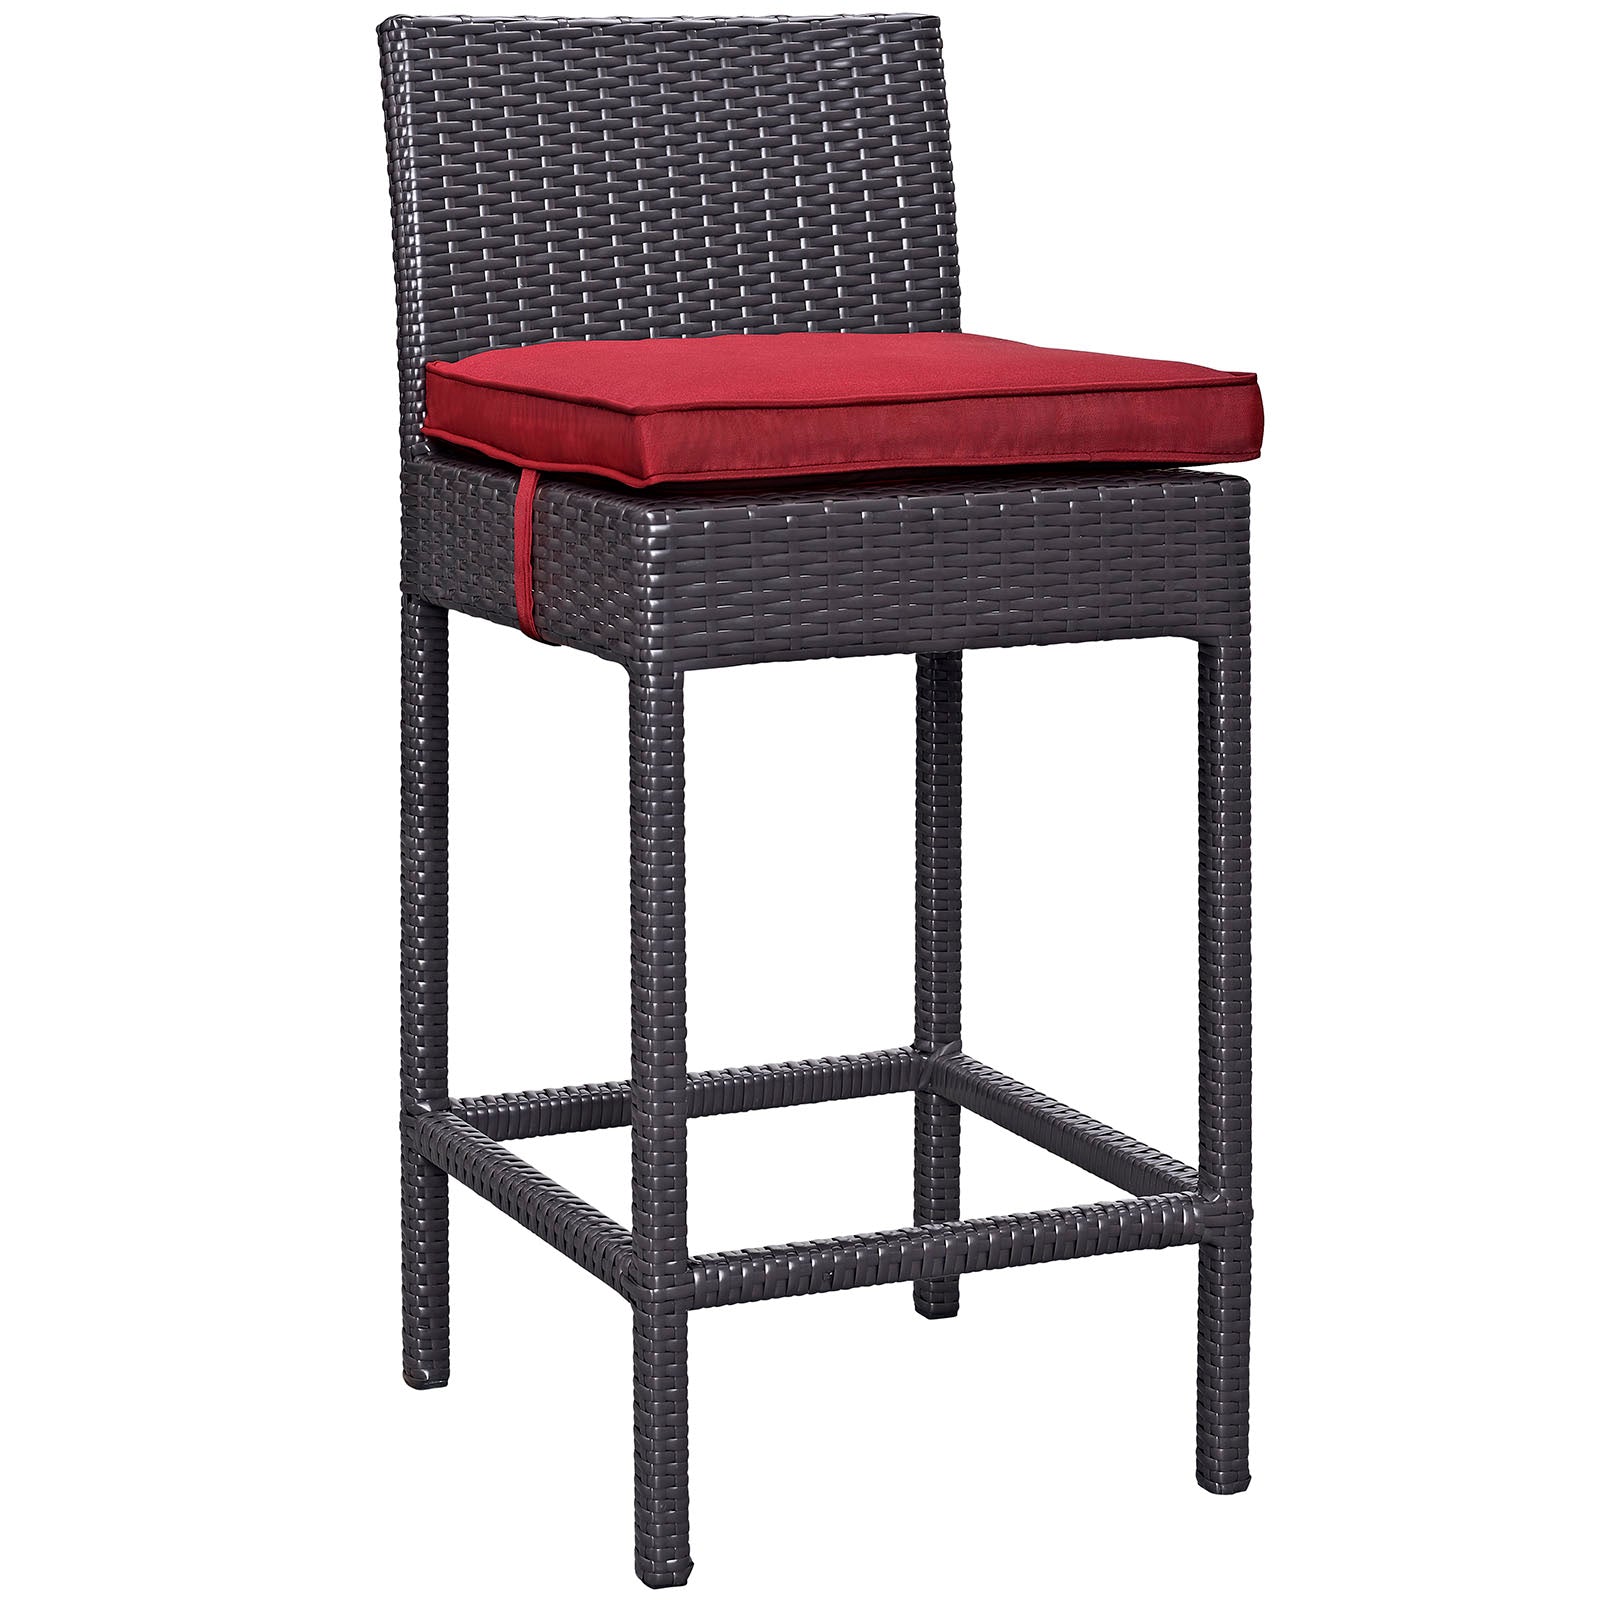 Modway Outdoor Barstools - Convene Outdoor Patio Fabric Bar Stool Espresso Red